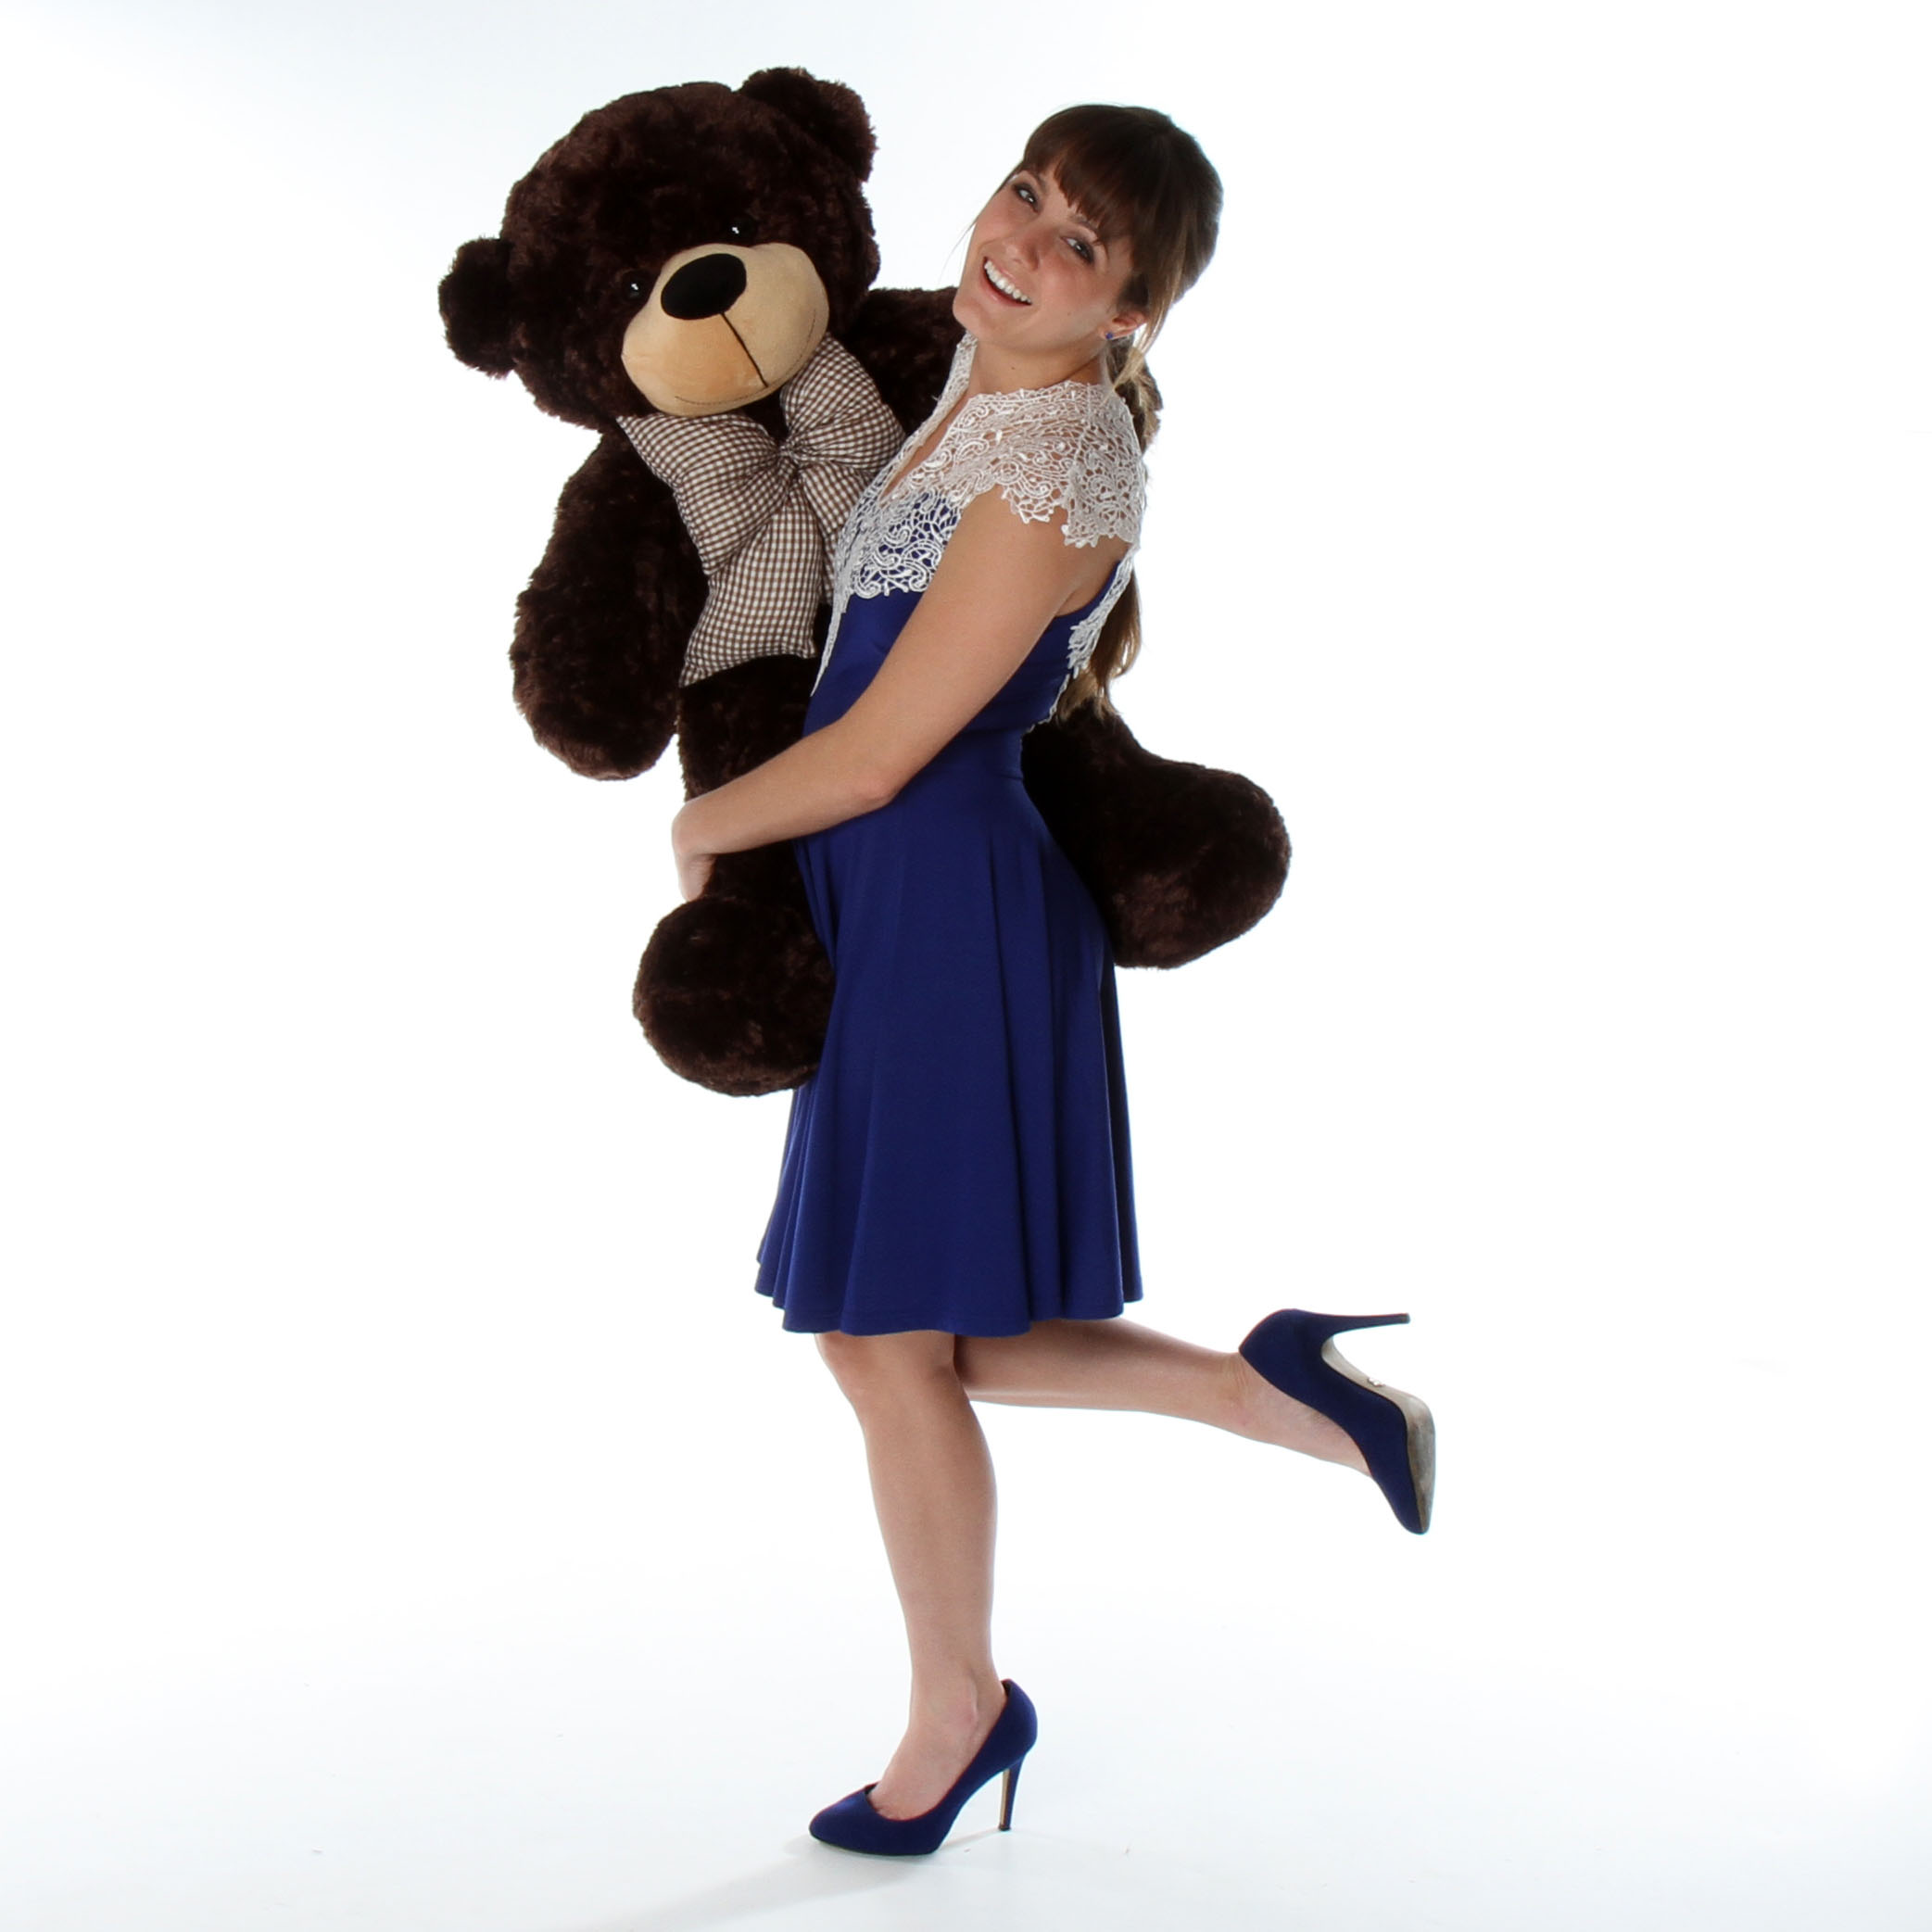 tall-dark-handsome-and-cuddly-38in-life-size-giant-teddy-bear-brownie-cuddles-dk-brown-fur.jpg